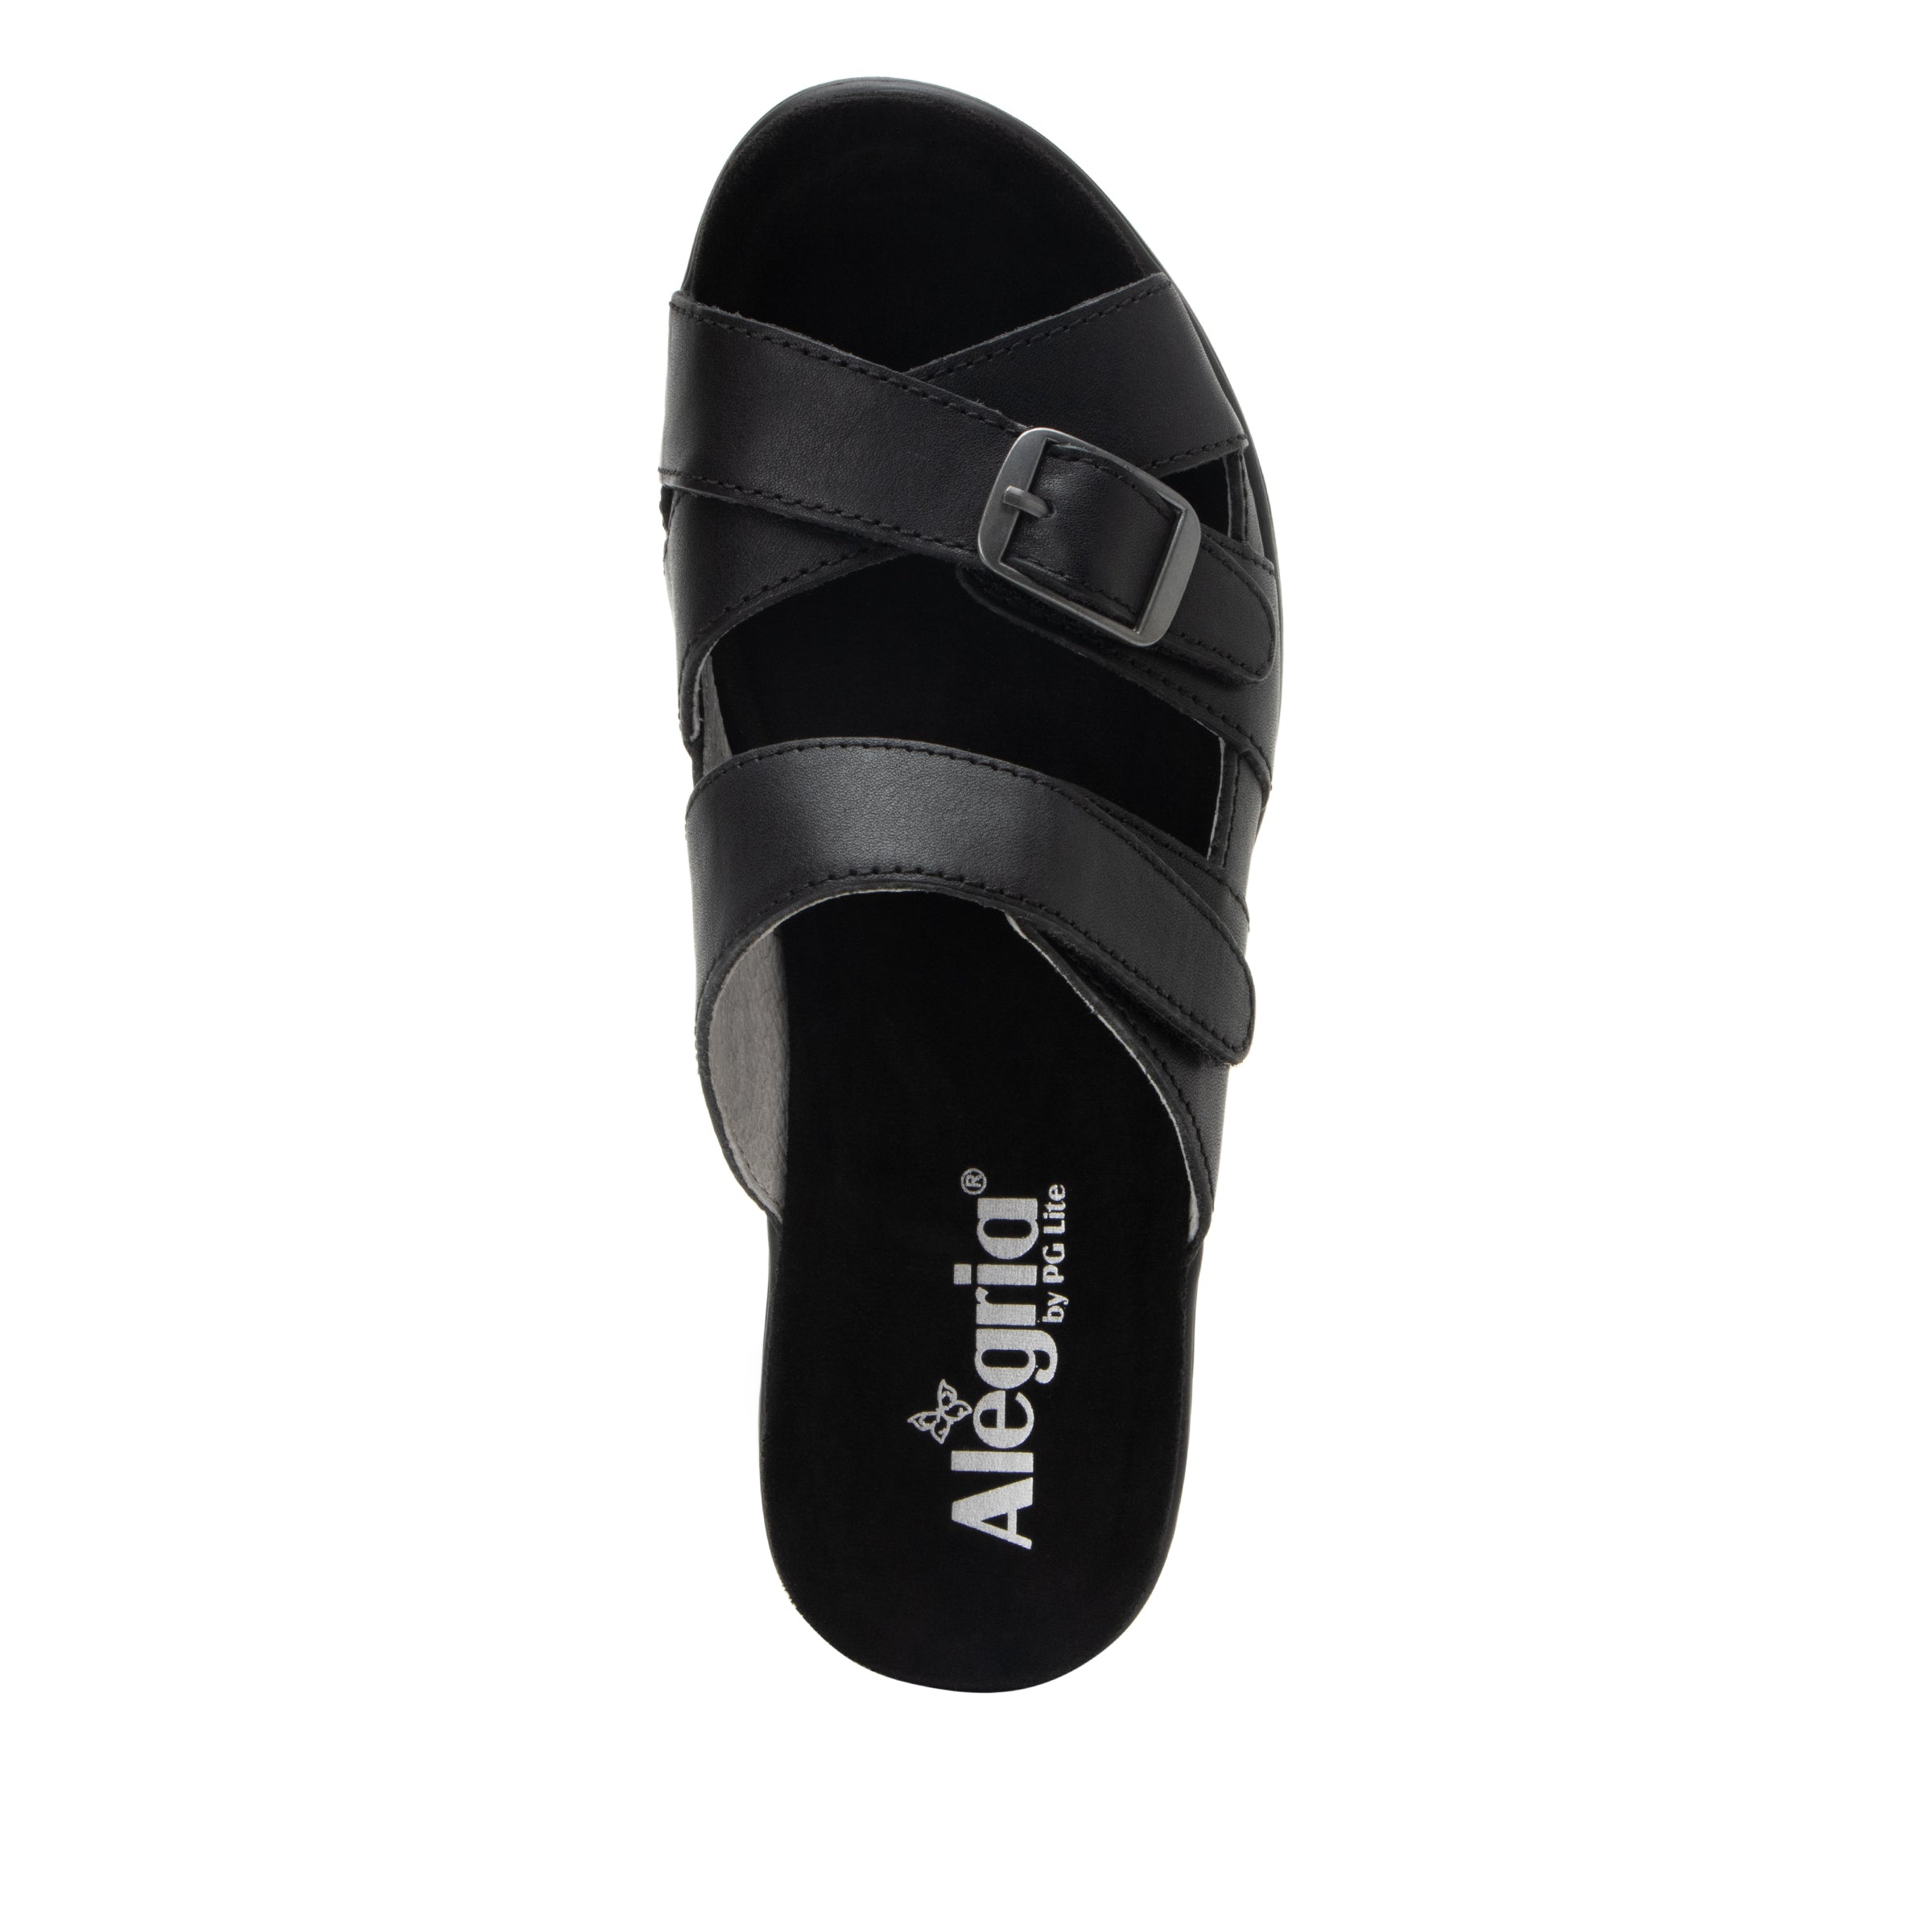 Sierra Coal Sandal - Alegria Shoes